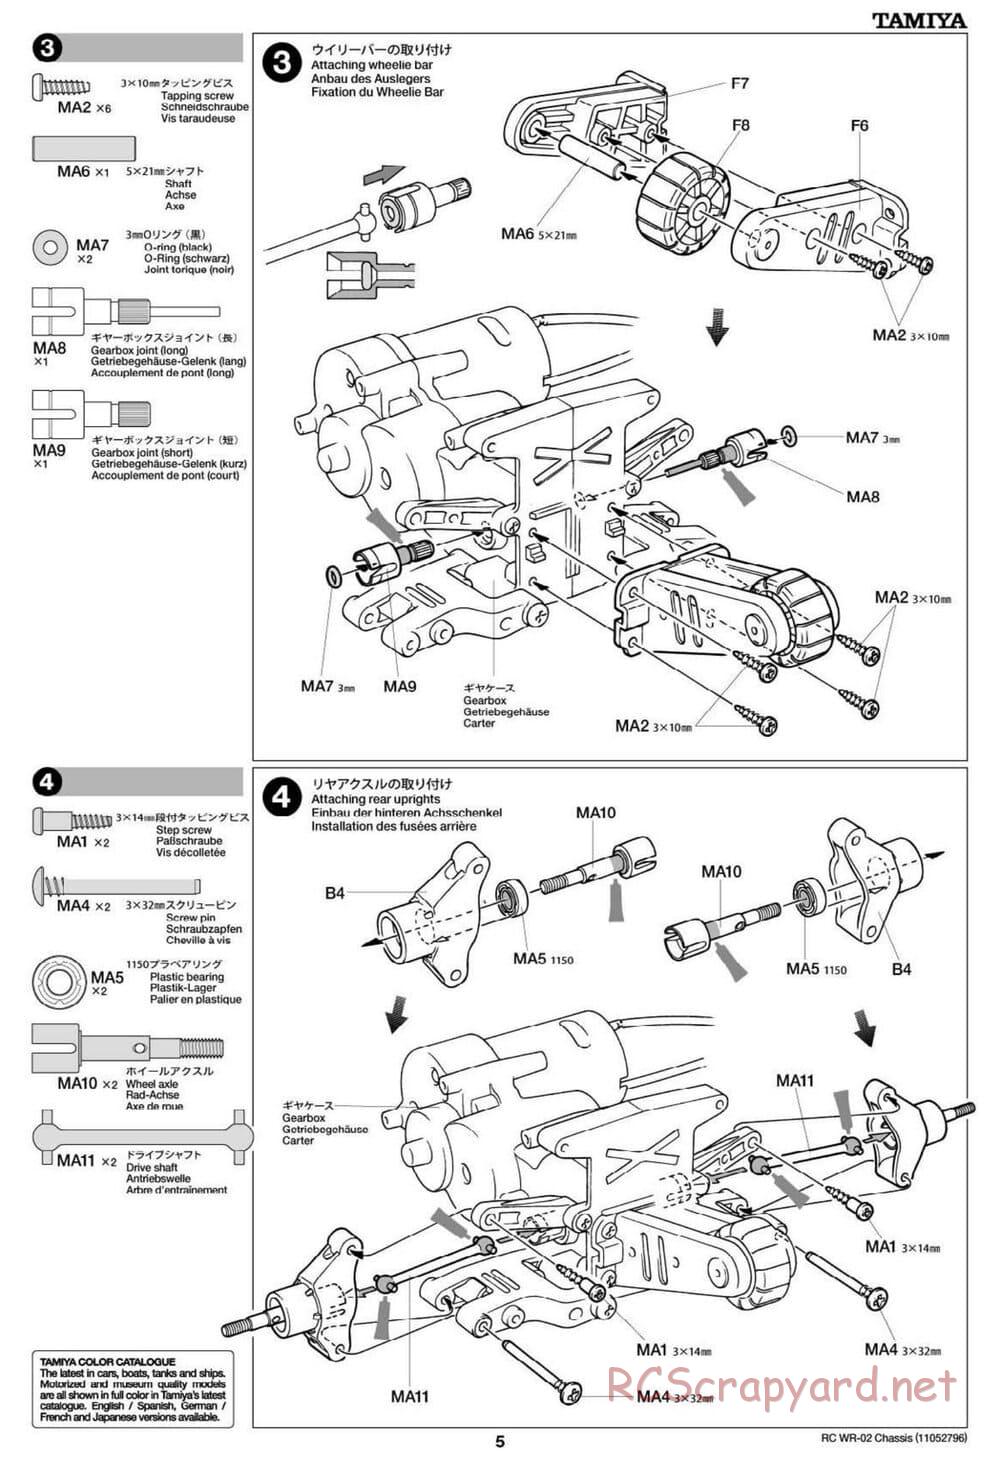 Tamiya - Suzuki Jimny (SJ30) Wheelie - WR-02 Chassis - Manual - Page 5